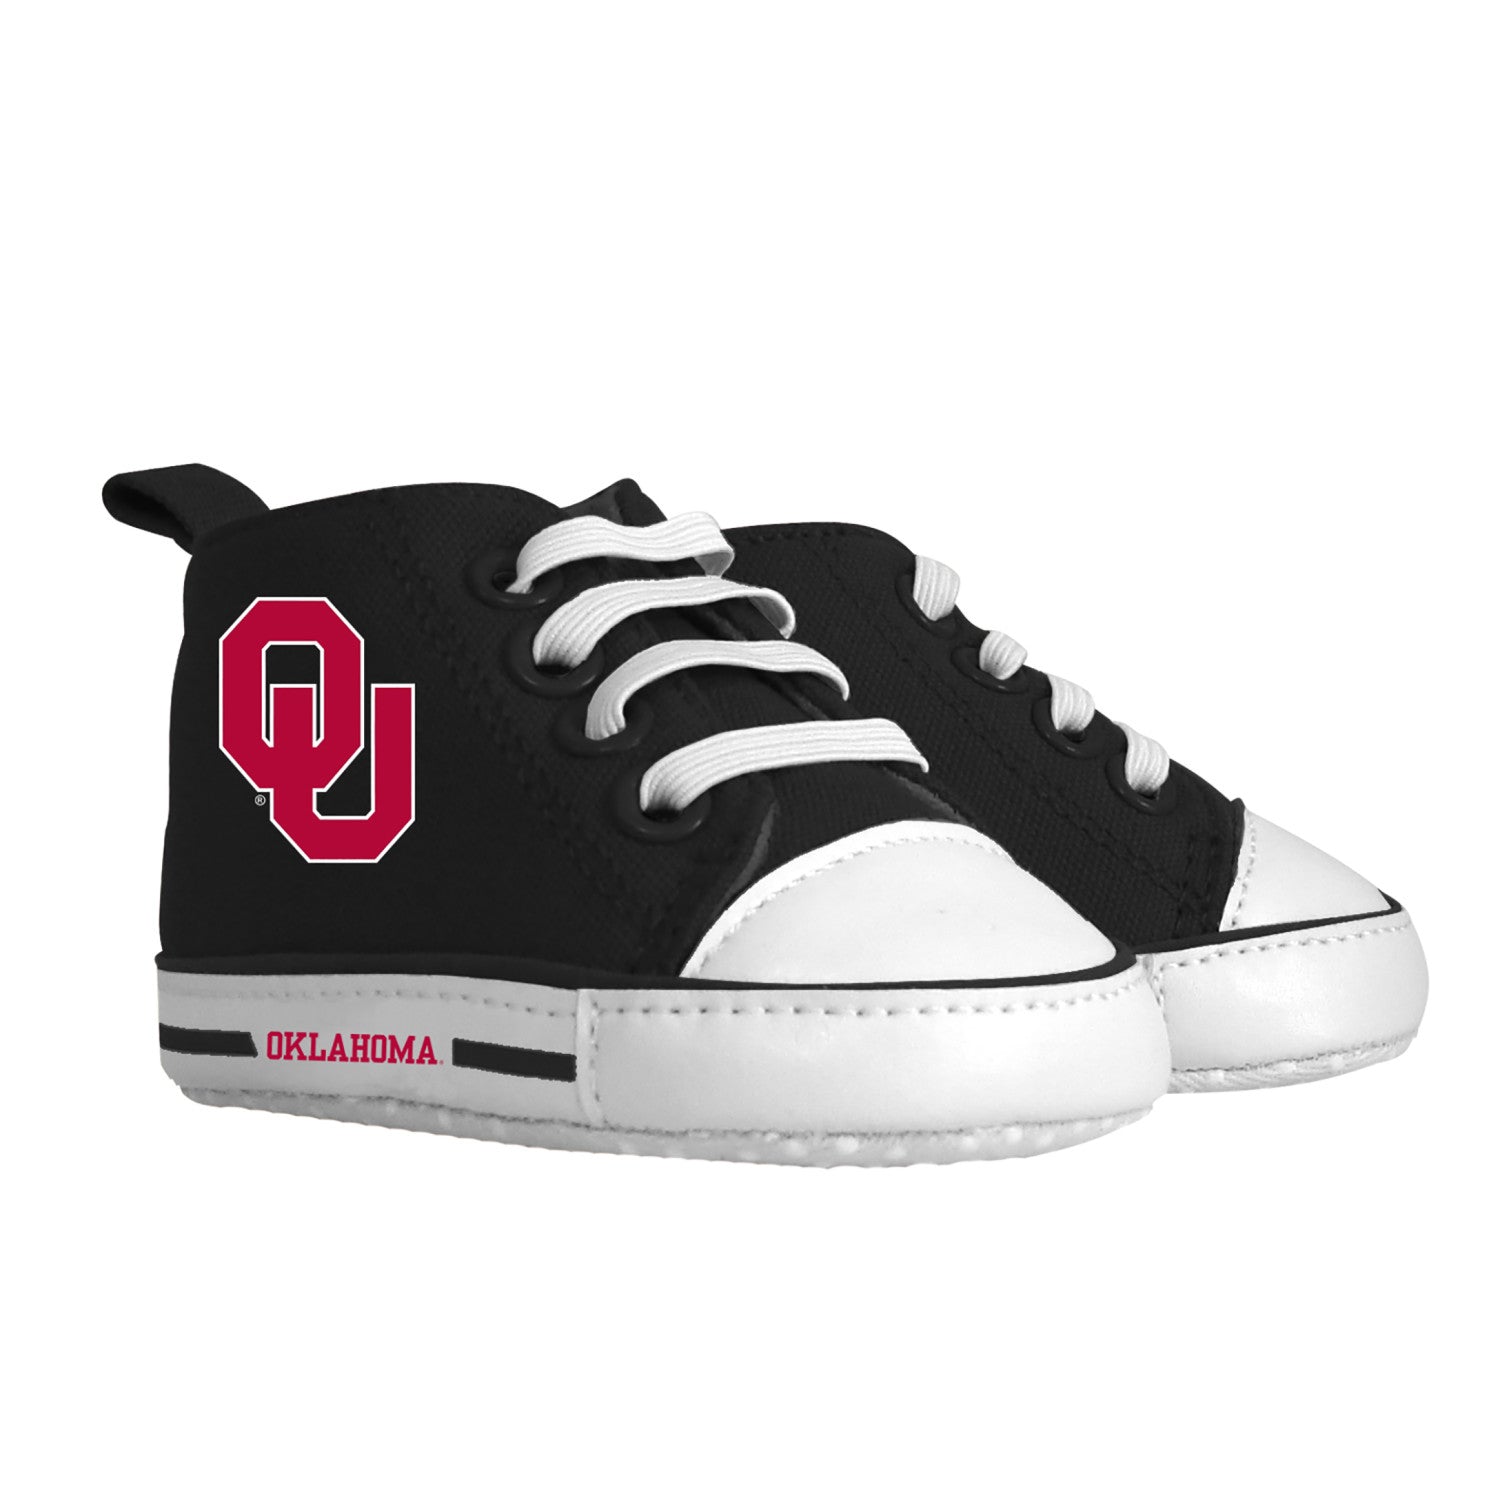 Oklahoma Sooners Baby Shoes